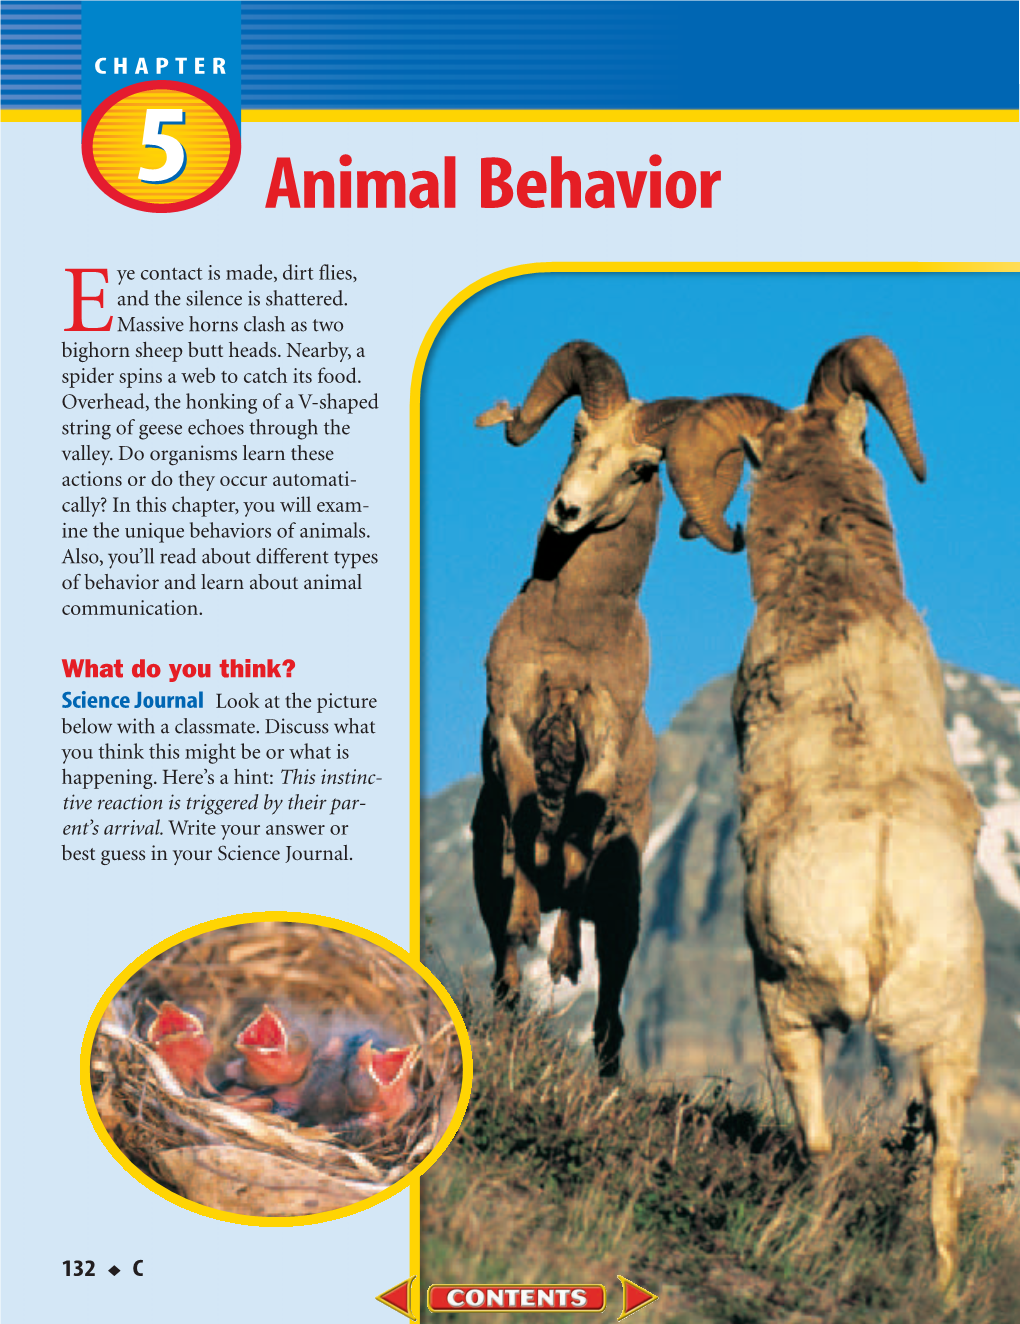 C: Chapter 5: Animal Behavior